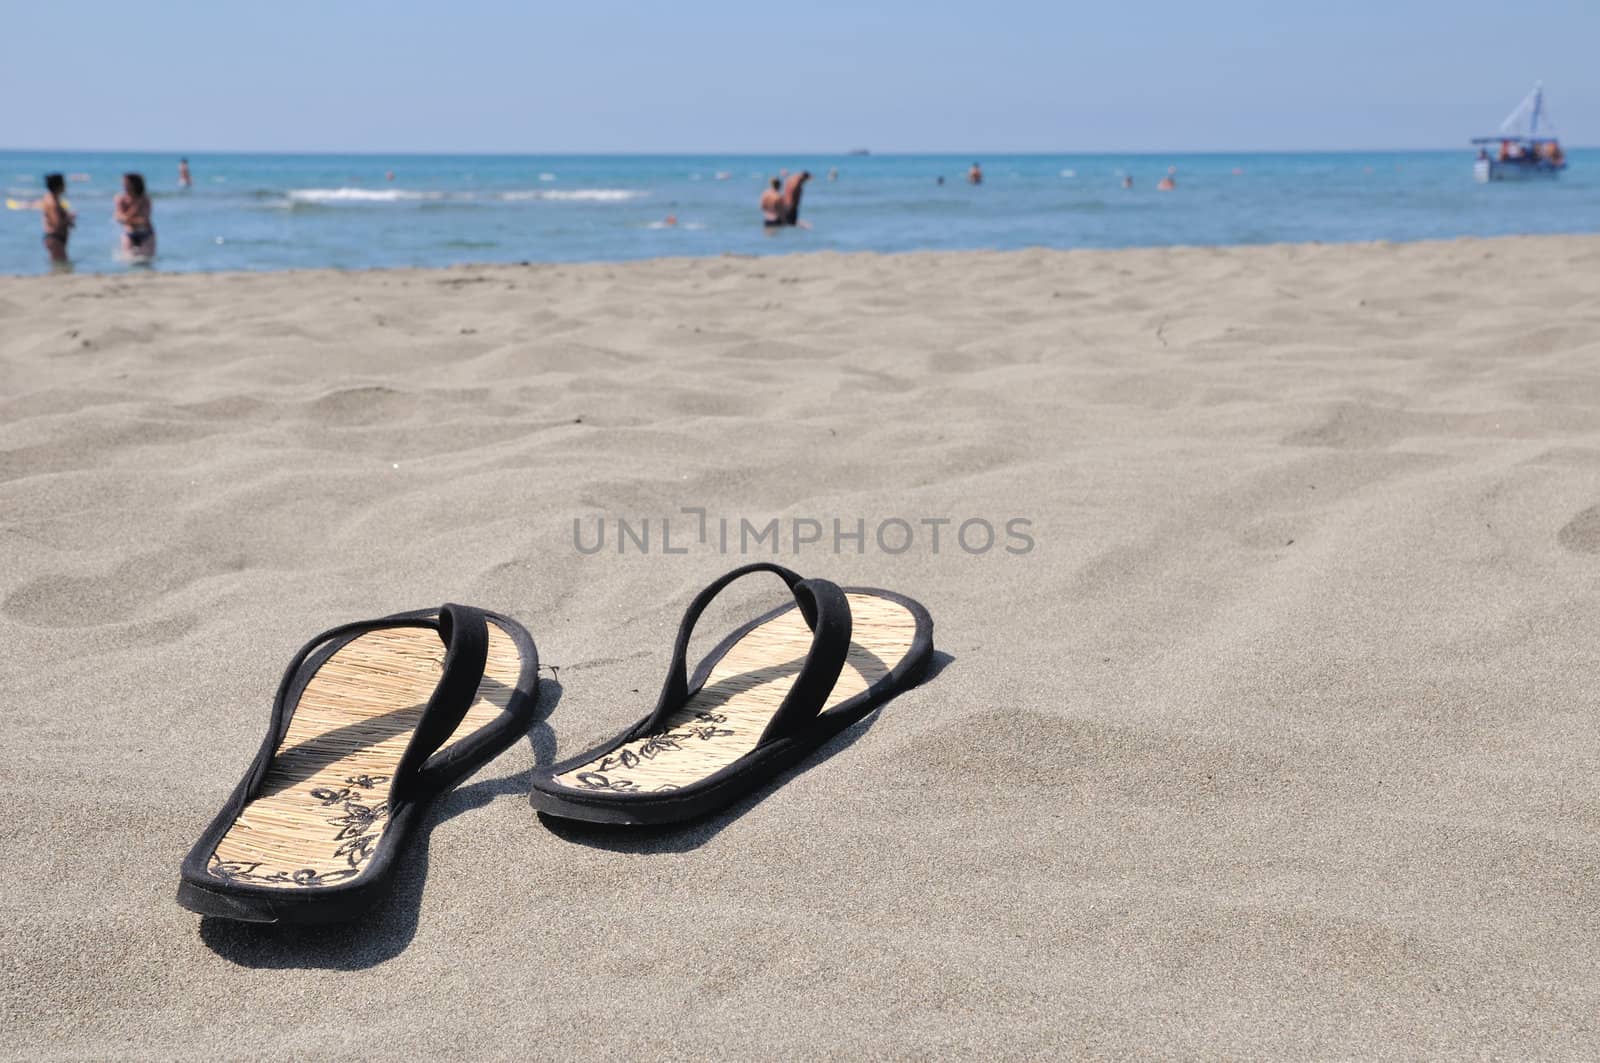 Slippers on beach by zagart36